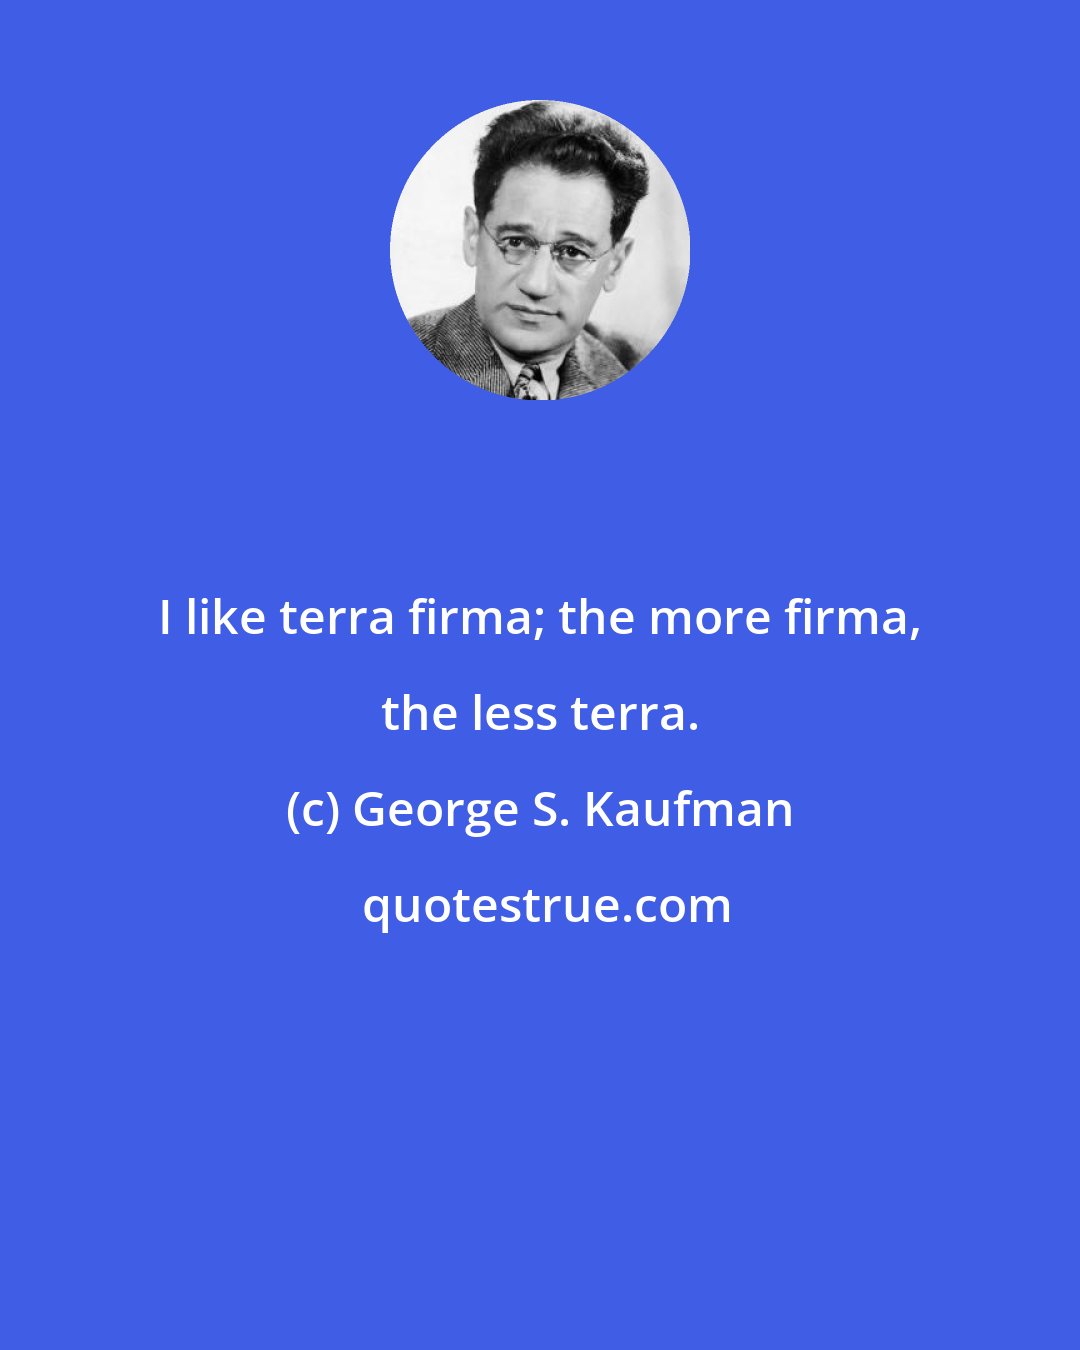 George S. Kaufman: I like terra firma; the more firma, the less terra.